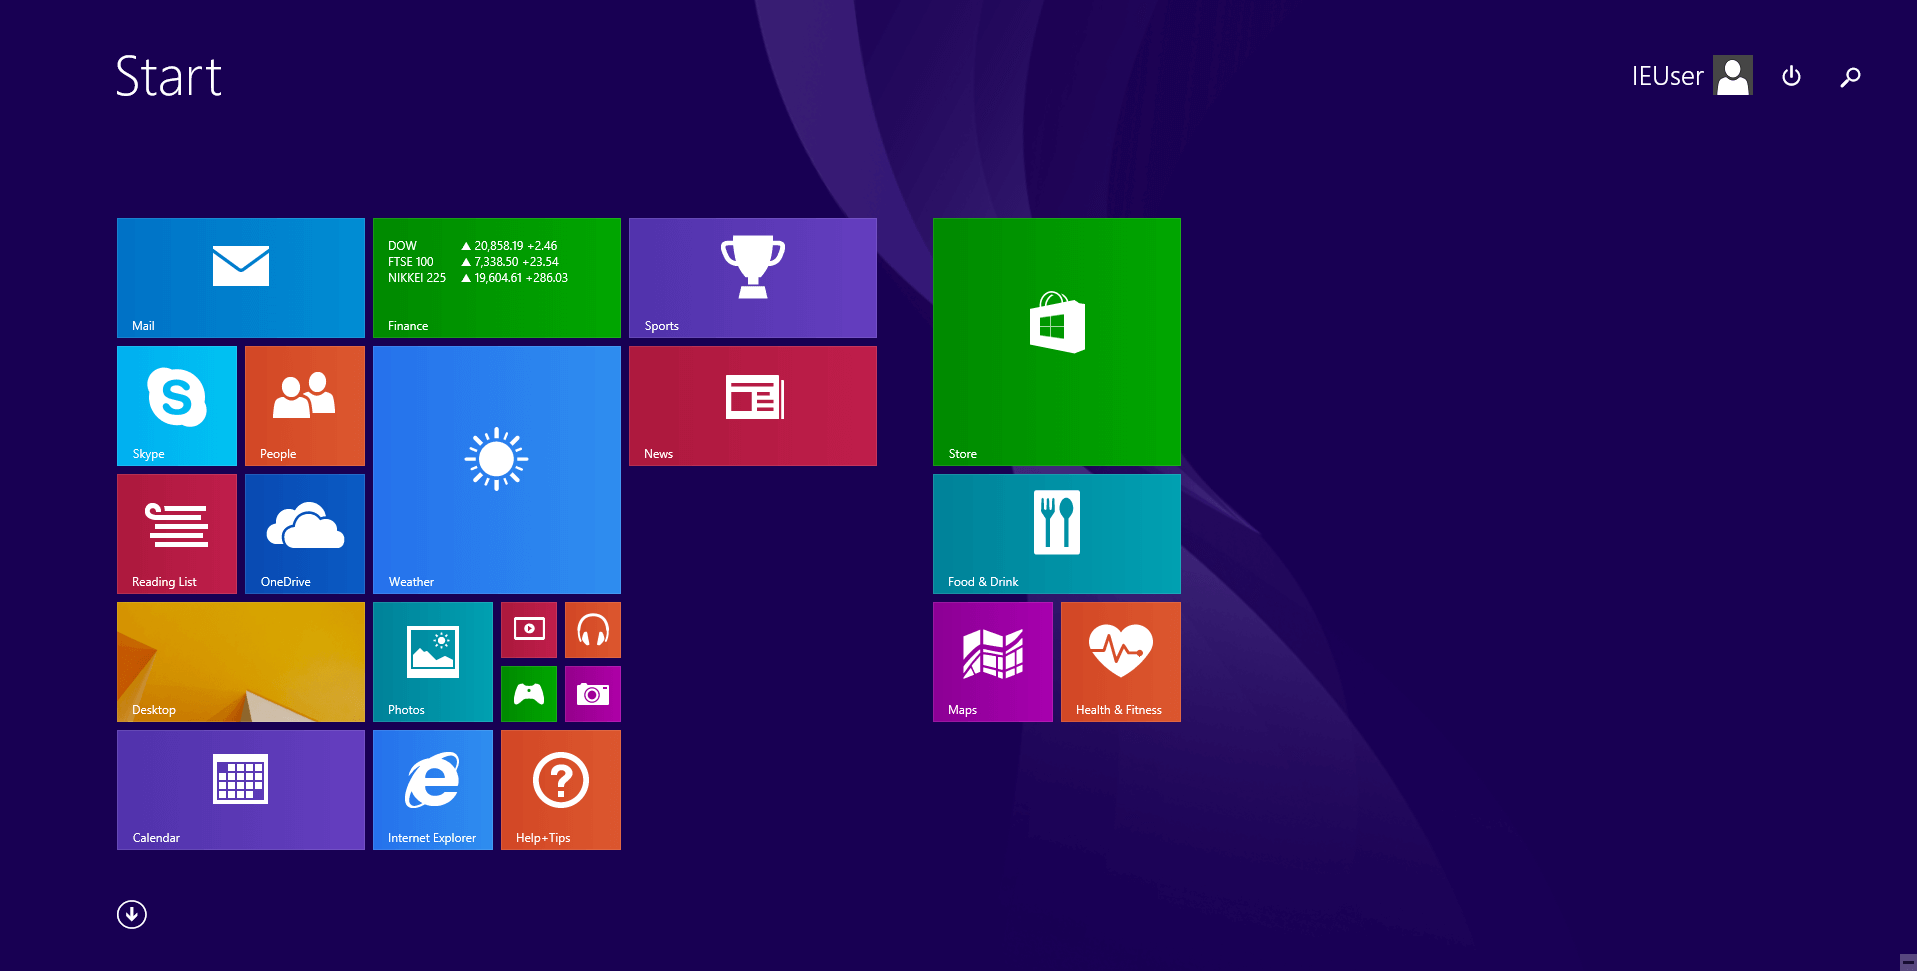 Start screen of Windows 8.1 with Modern UI